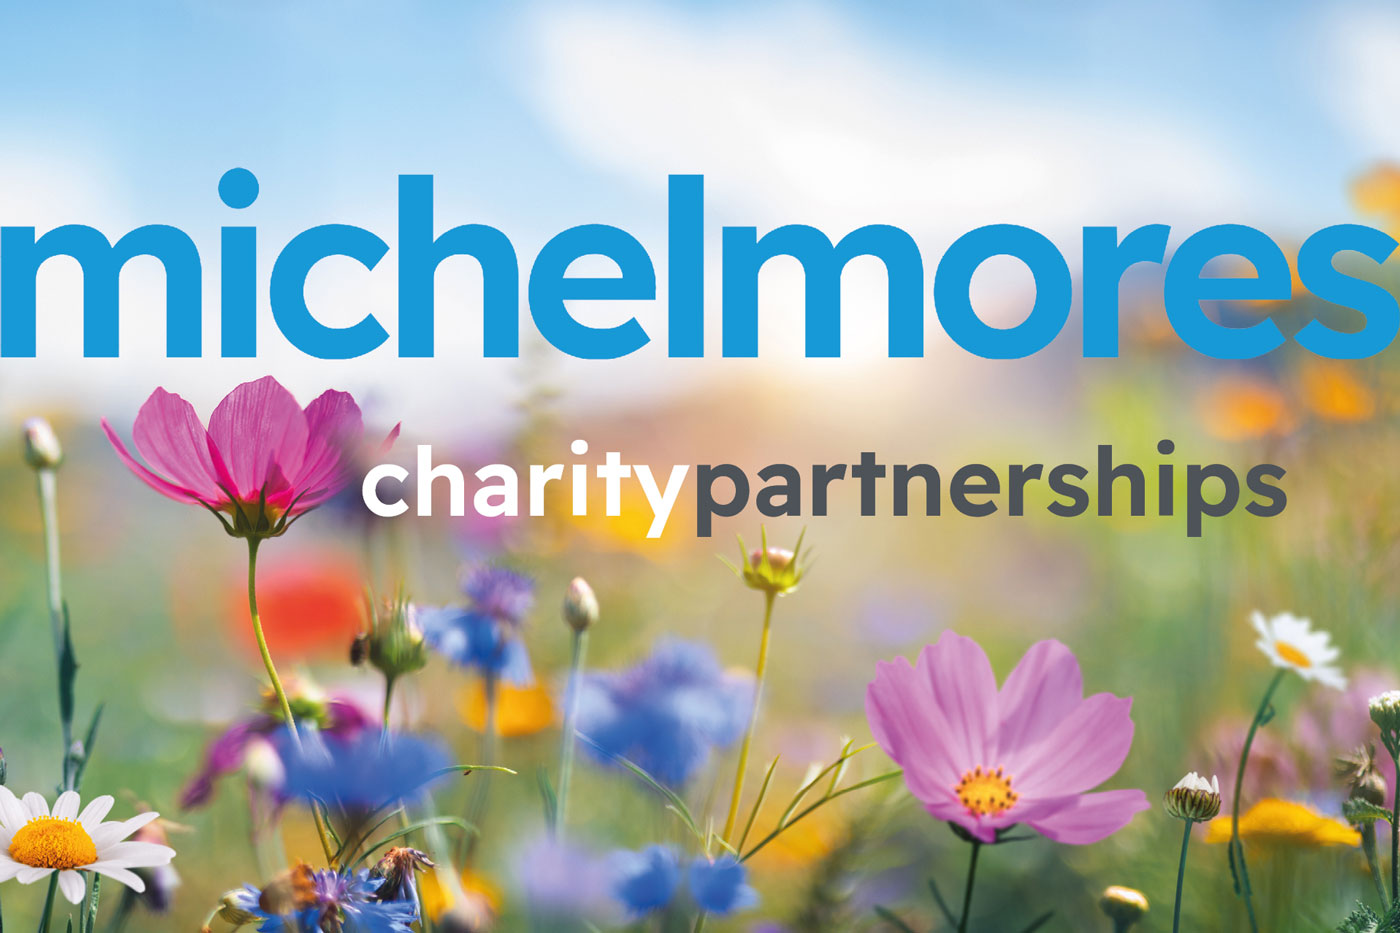 Michelmores raises £60,000 for the Charlie Waller Trust